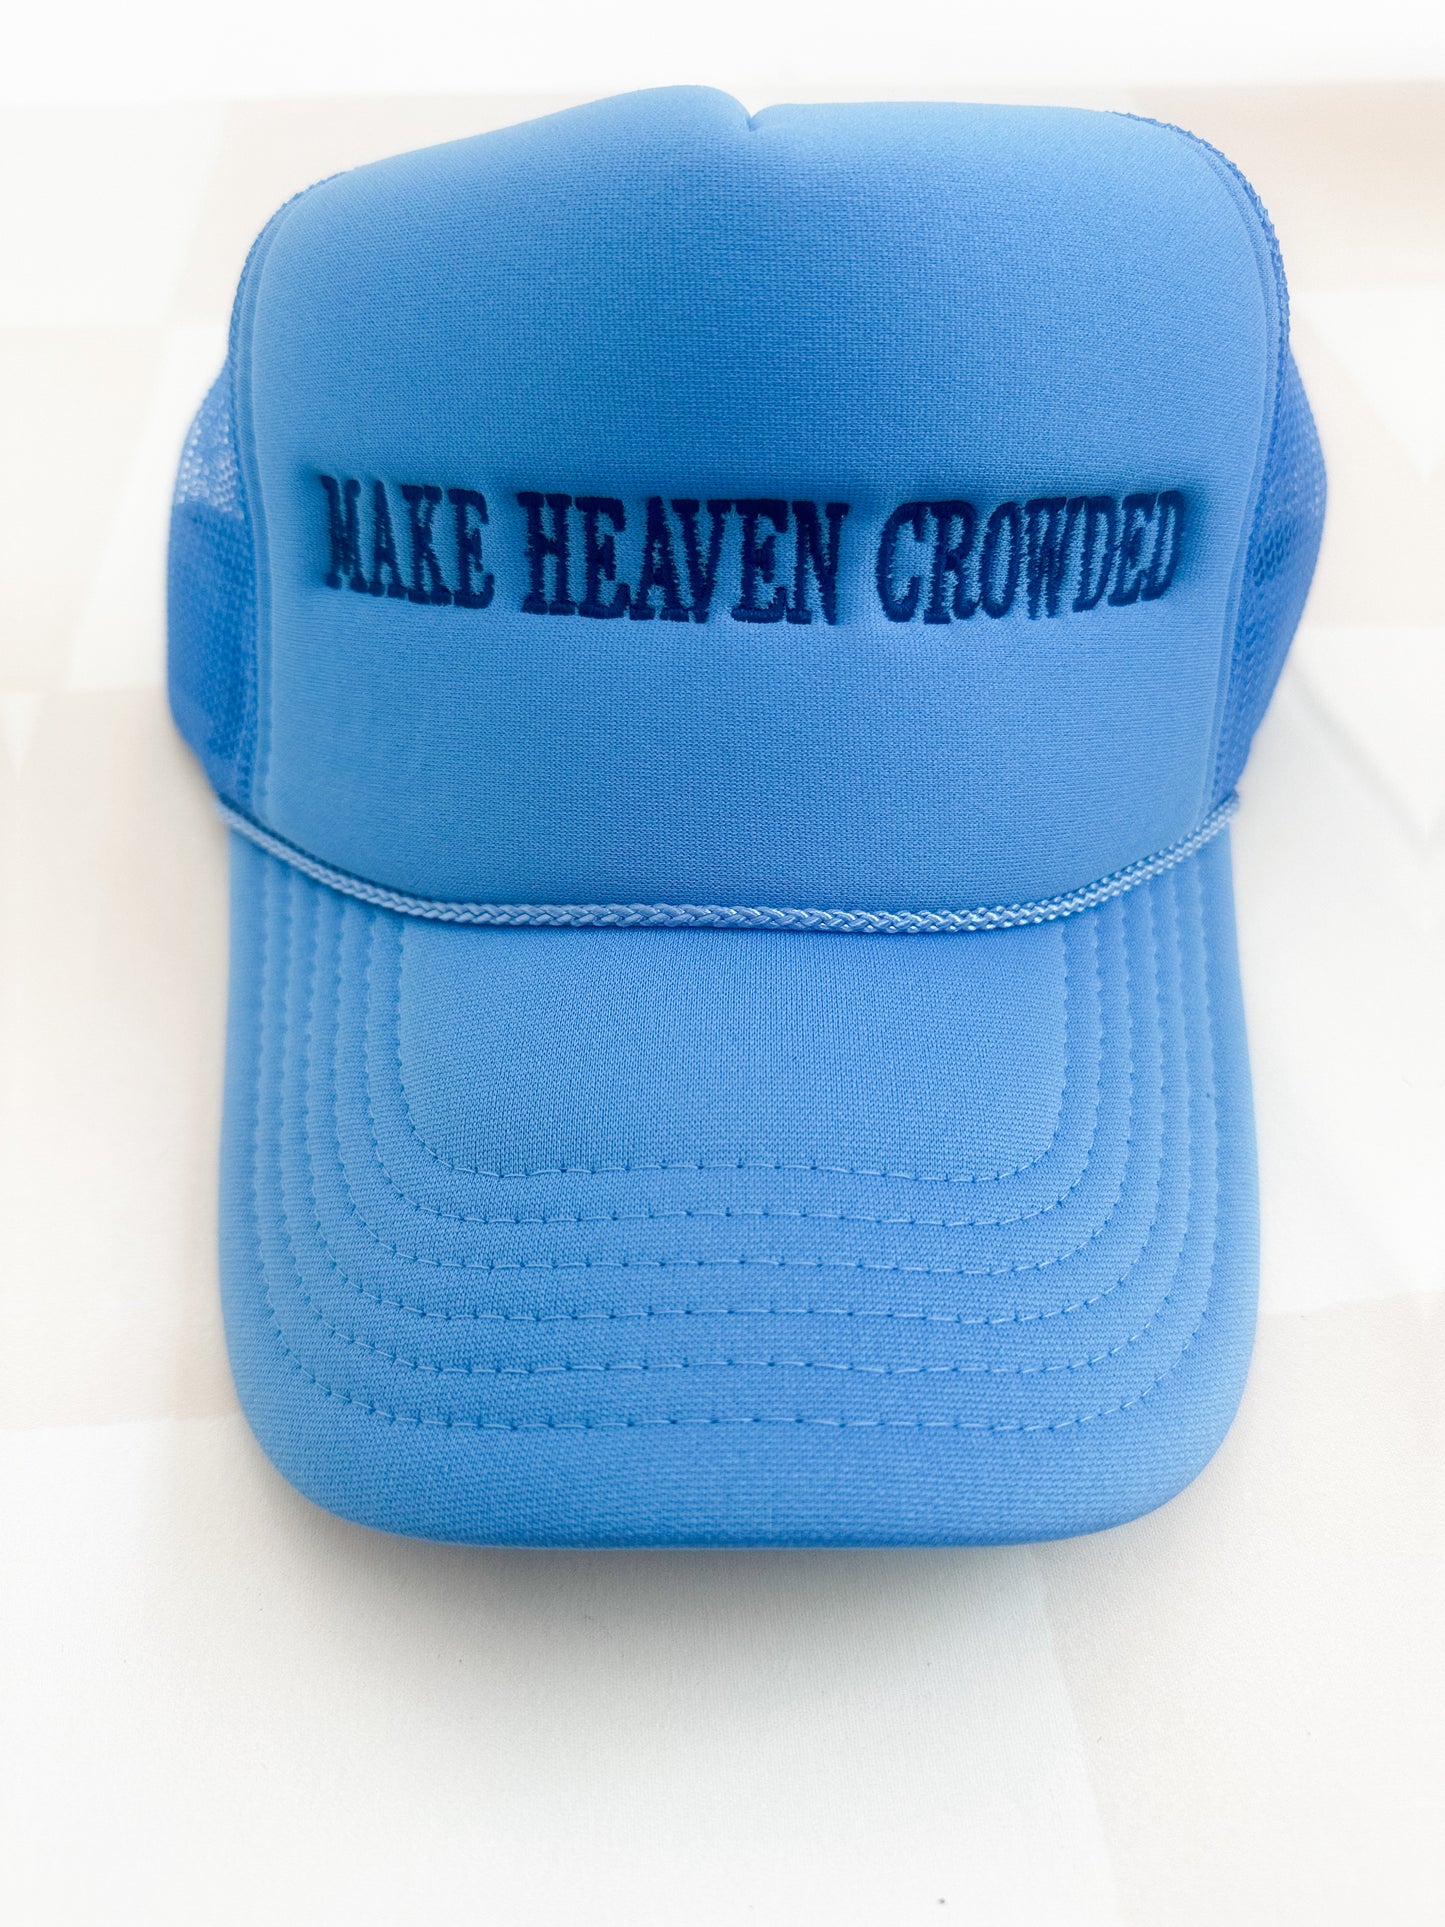 Make Heaven Crowded Trucker Hat